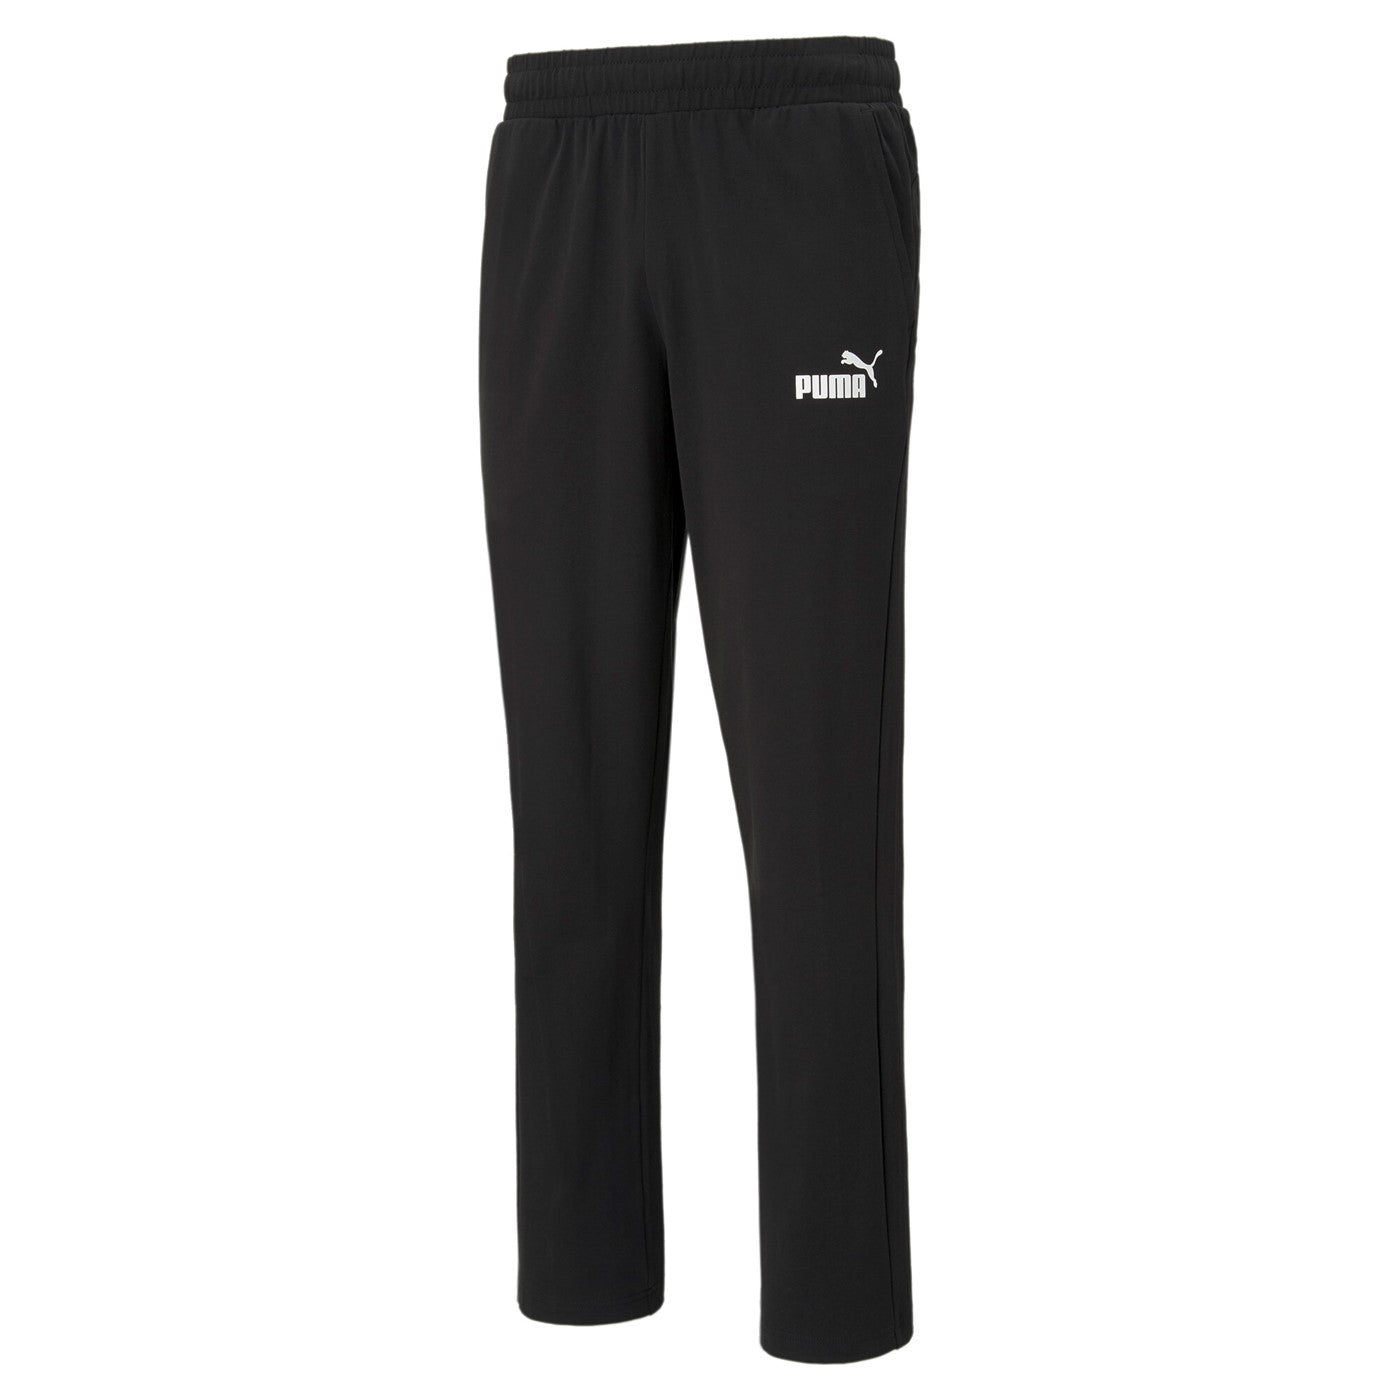 Puma pantalone sportivo da uomo in cotone jersey ESS Jersey Pants op 586747 01 black